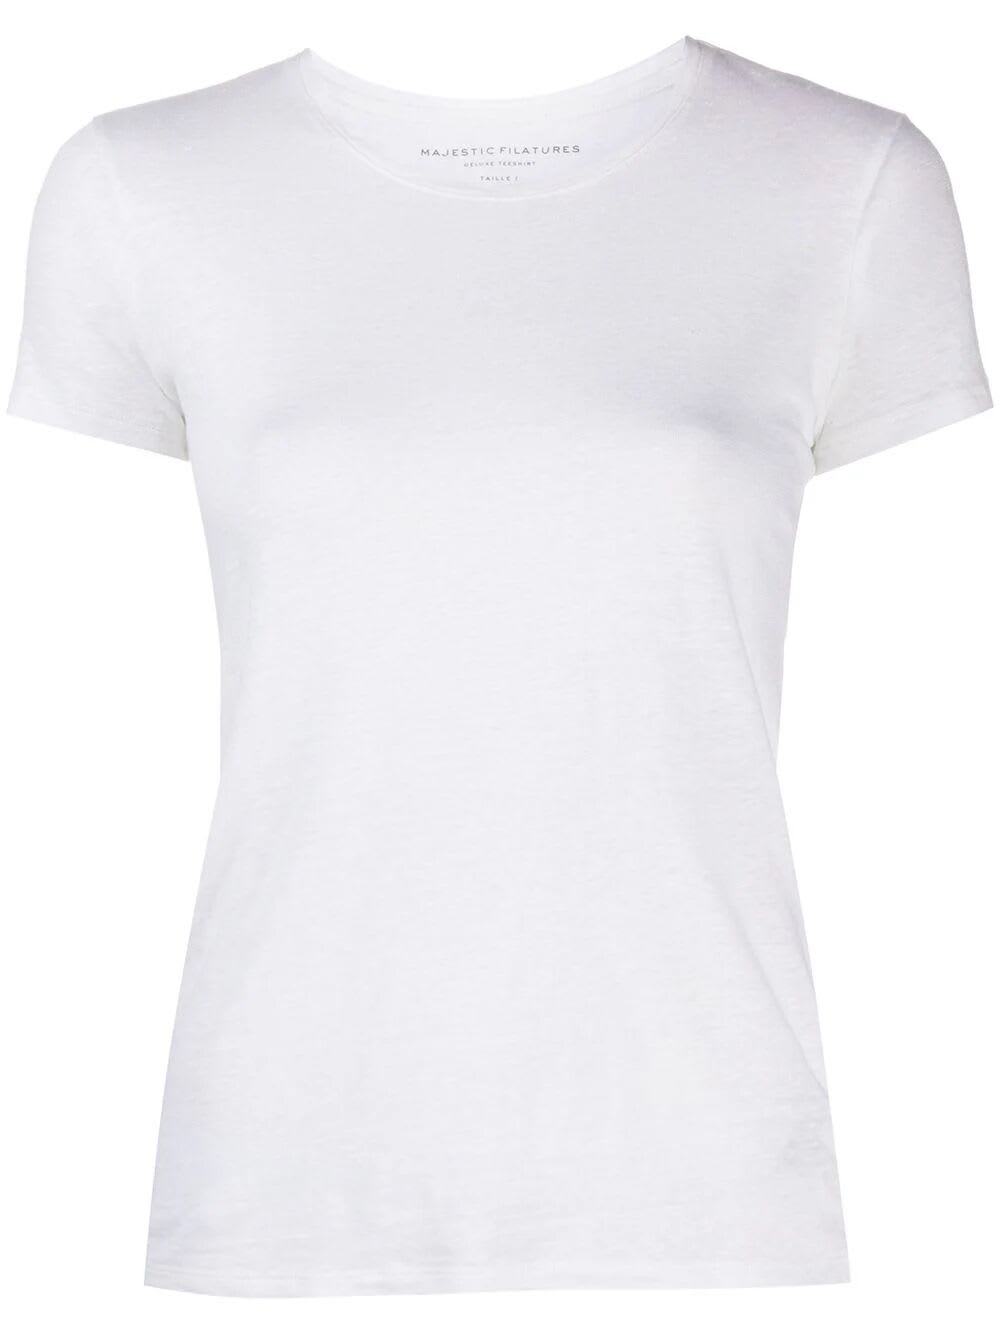 Short Sleeve Round Neck T-shirt